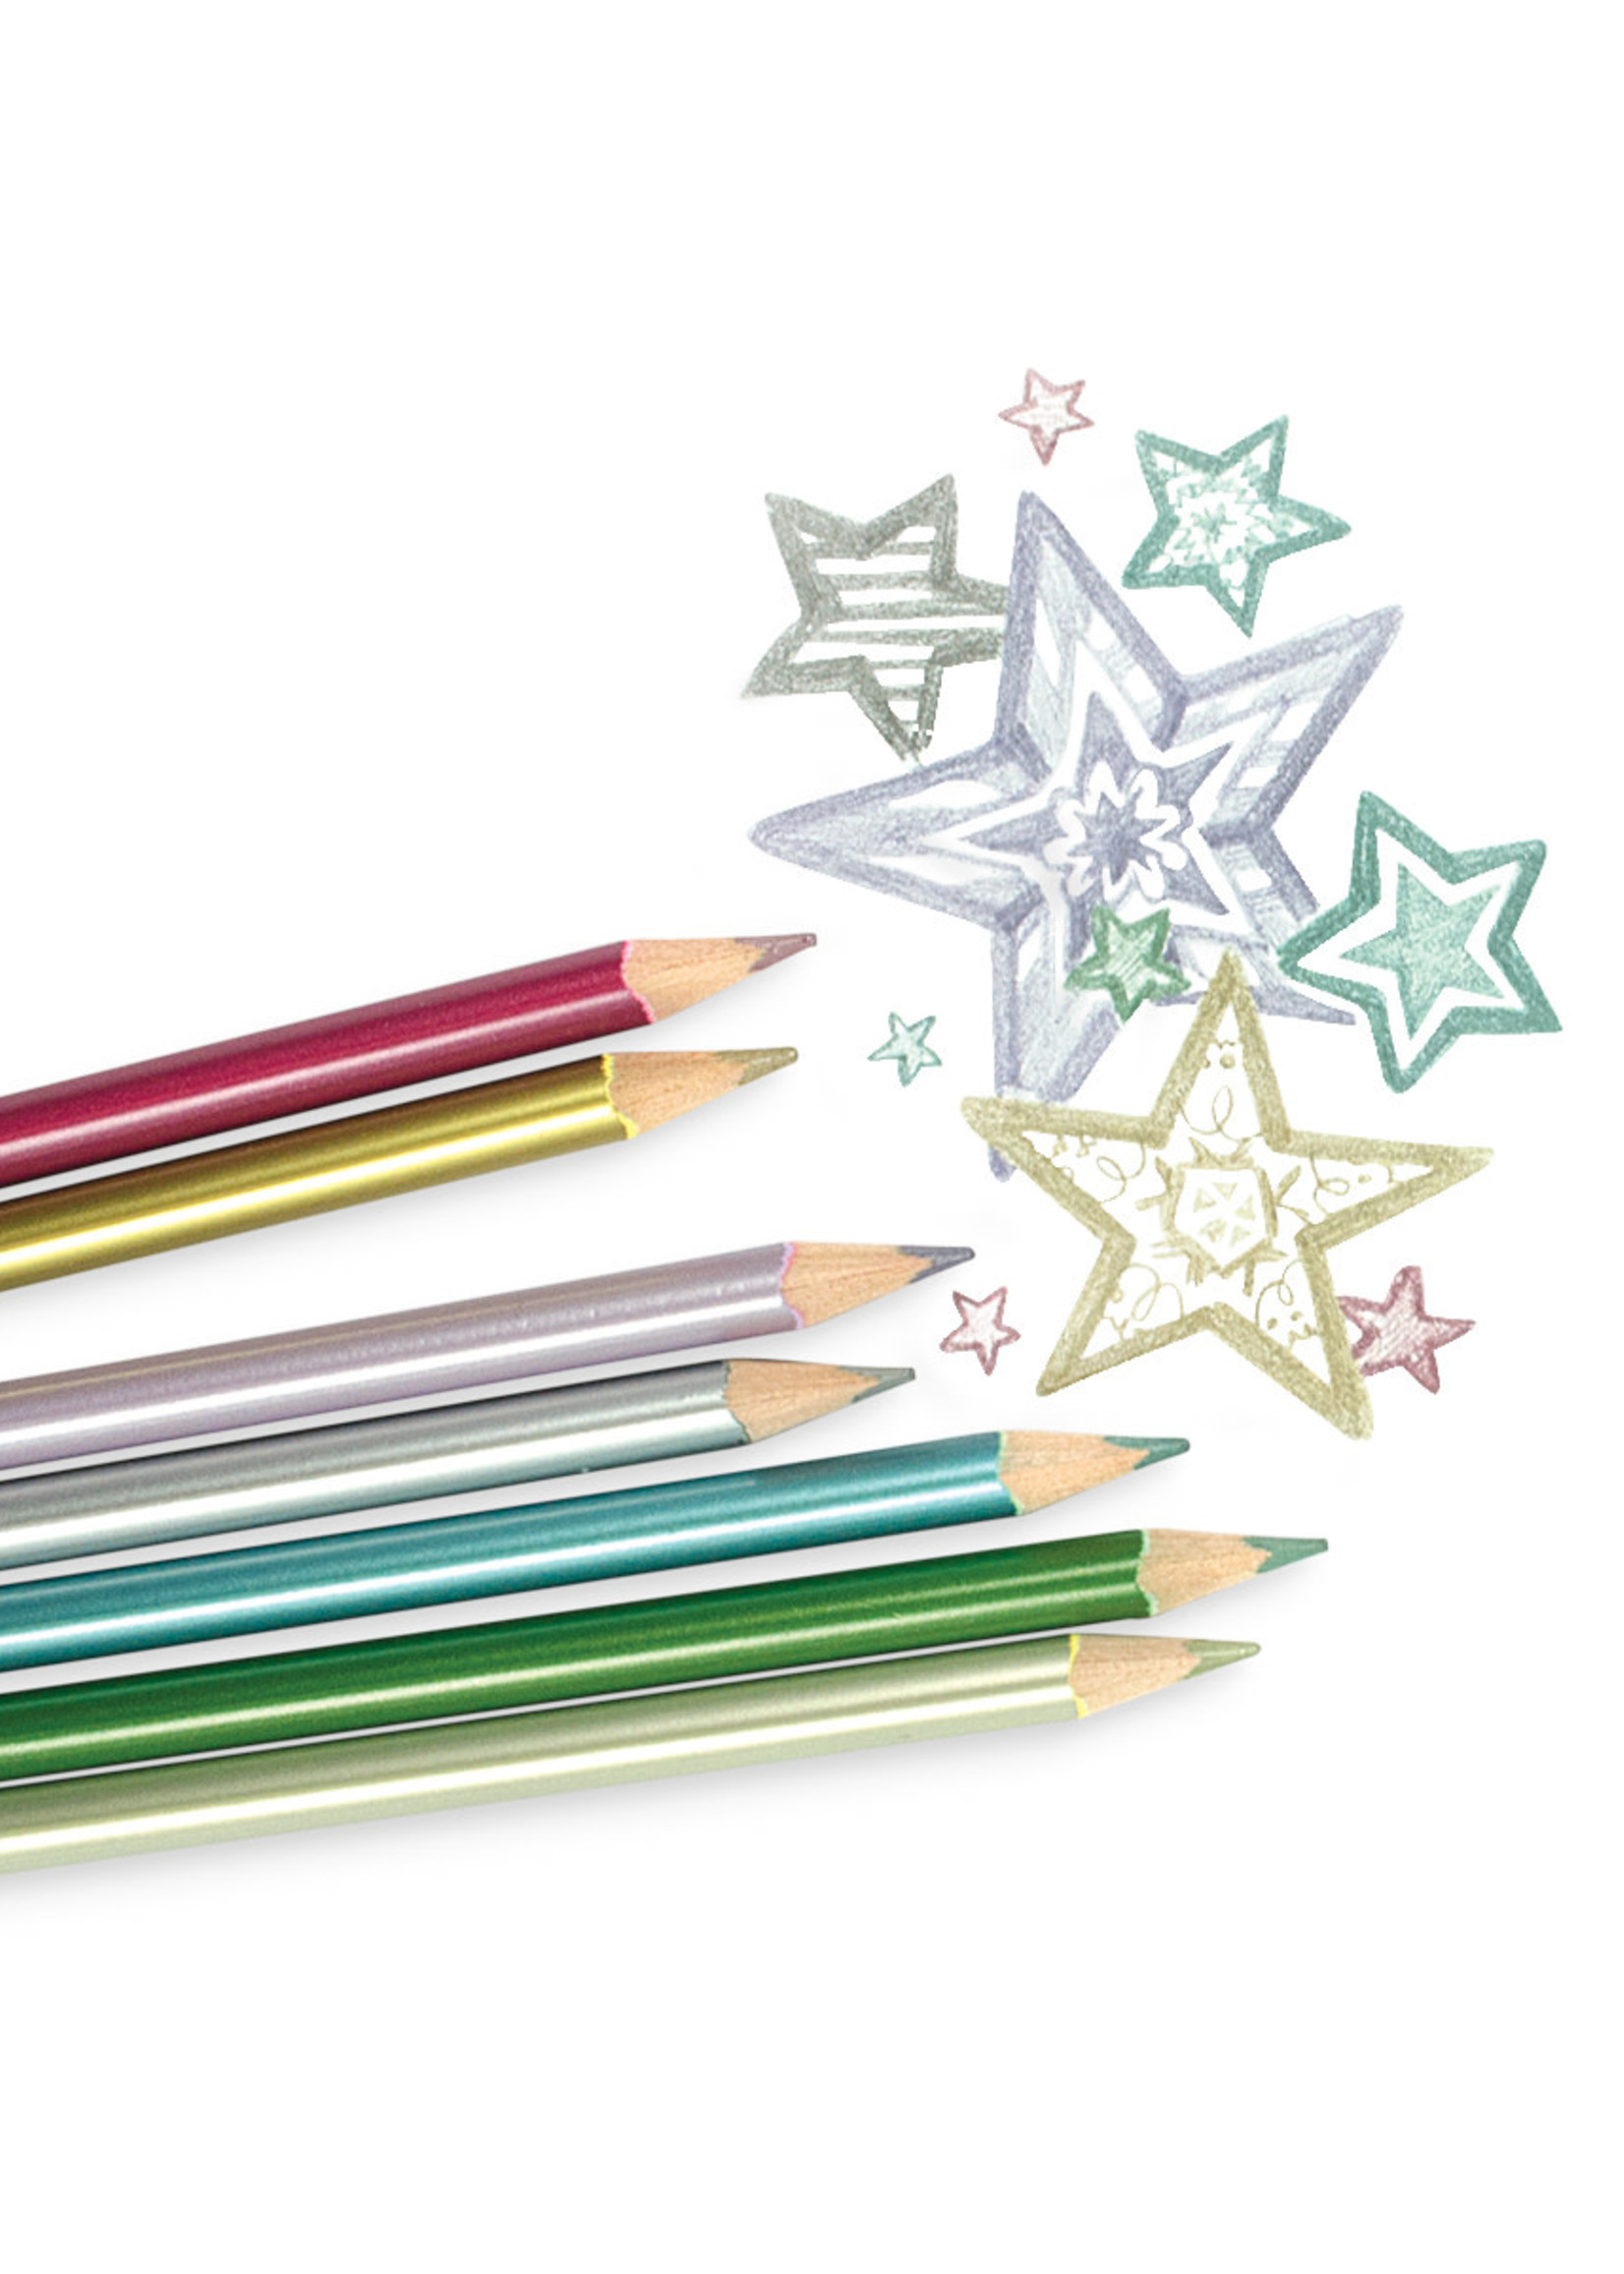 OOLY Modern Metallics Colored Pencils - Set of 12